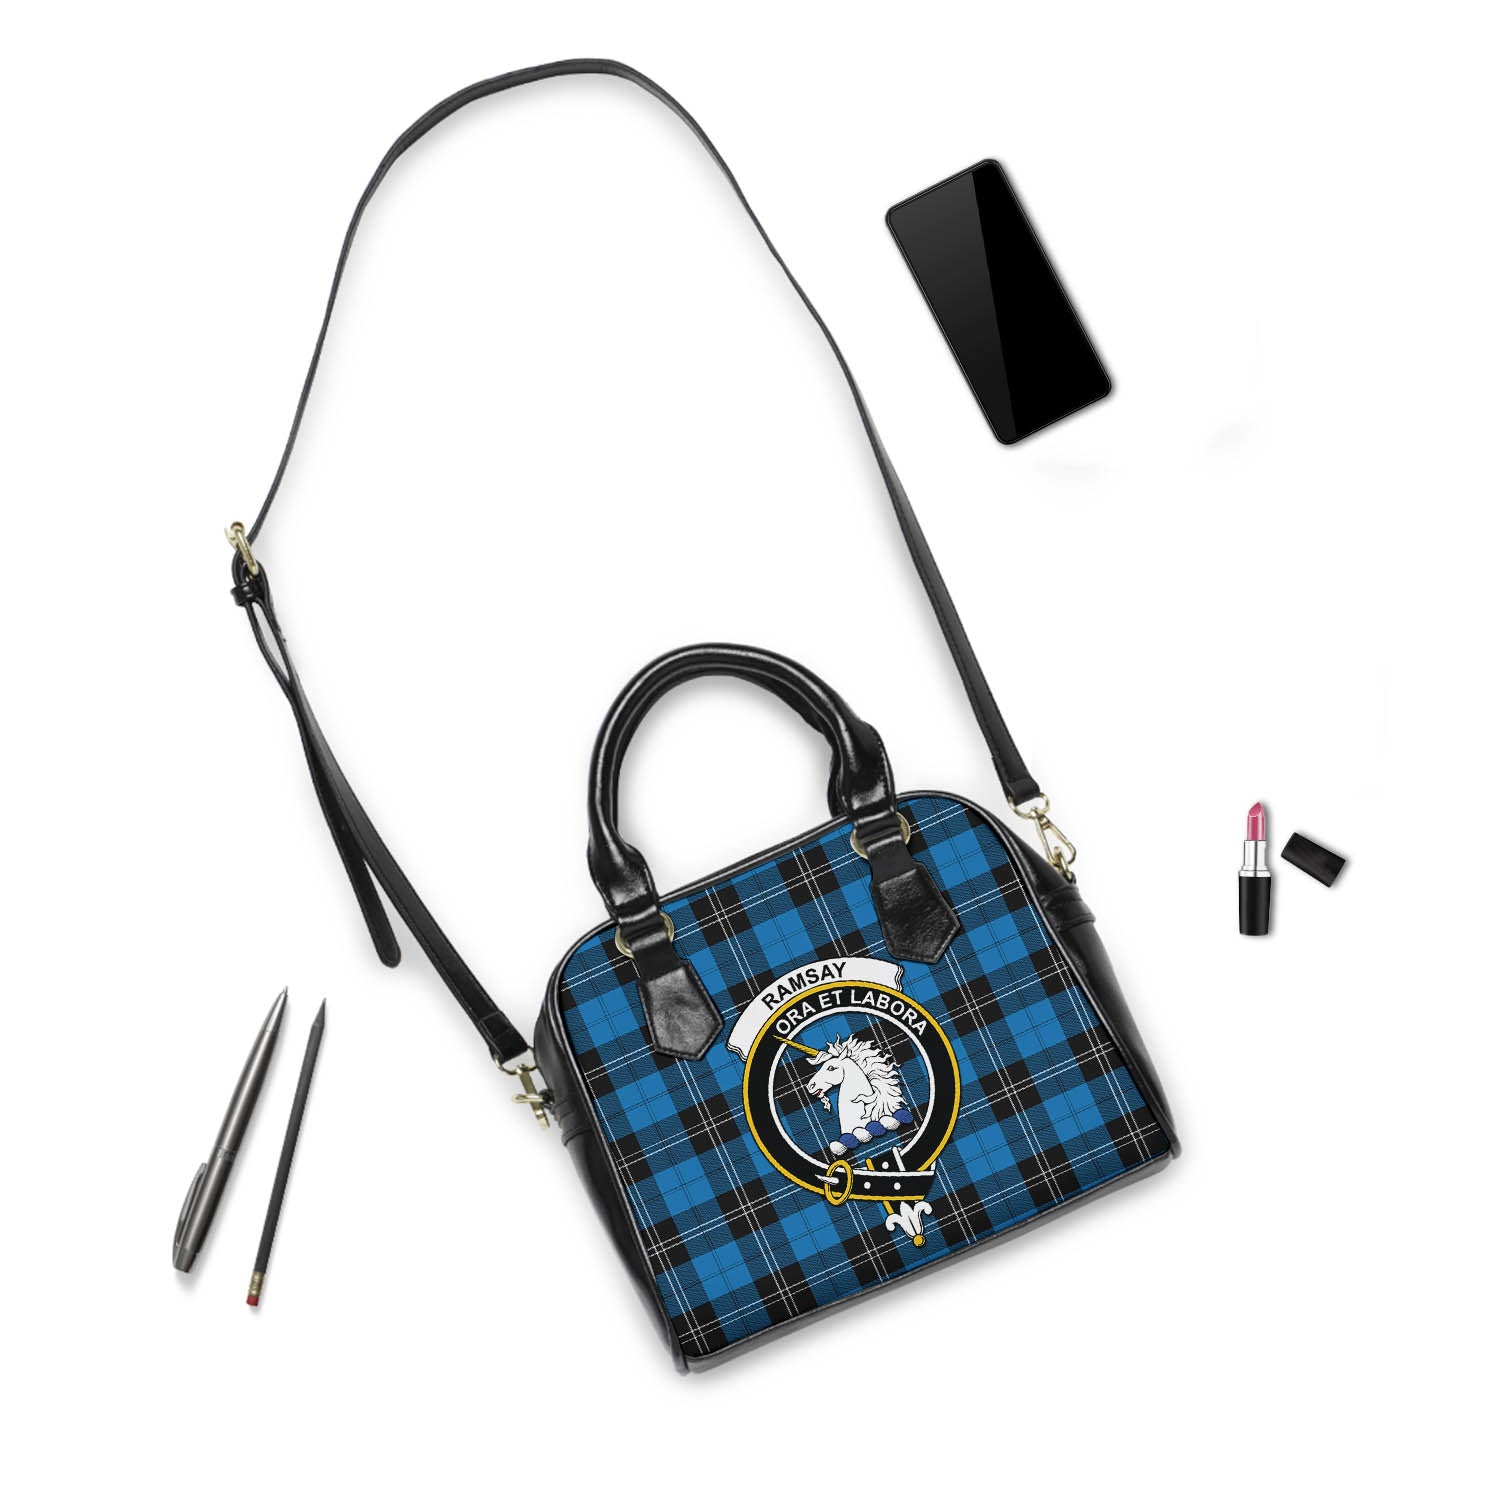 Ramsay Blue Ancient Tartan Shoulder Handbags with Family Crest - Tartanvibesclothing